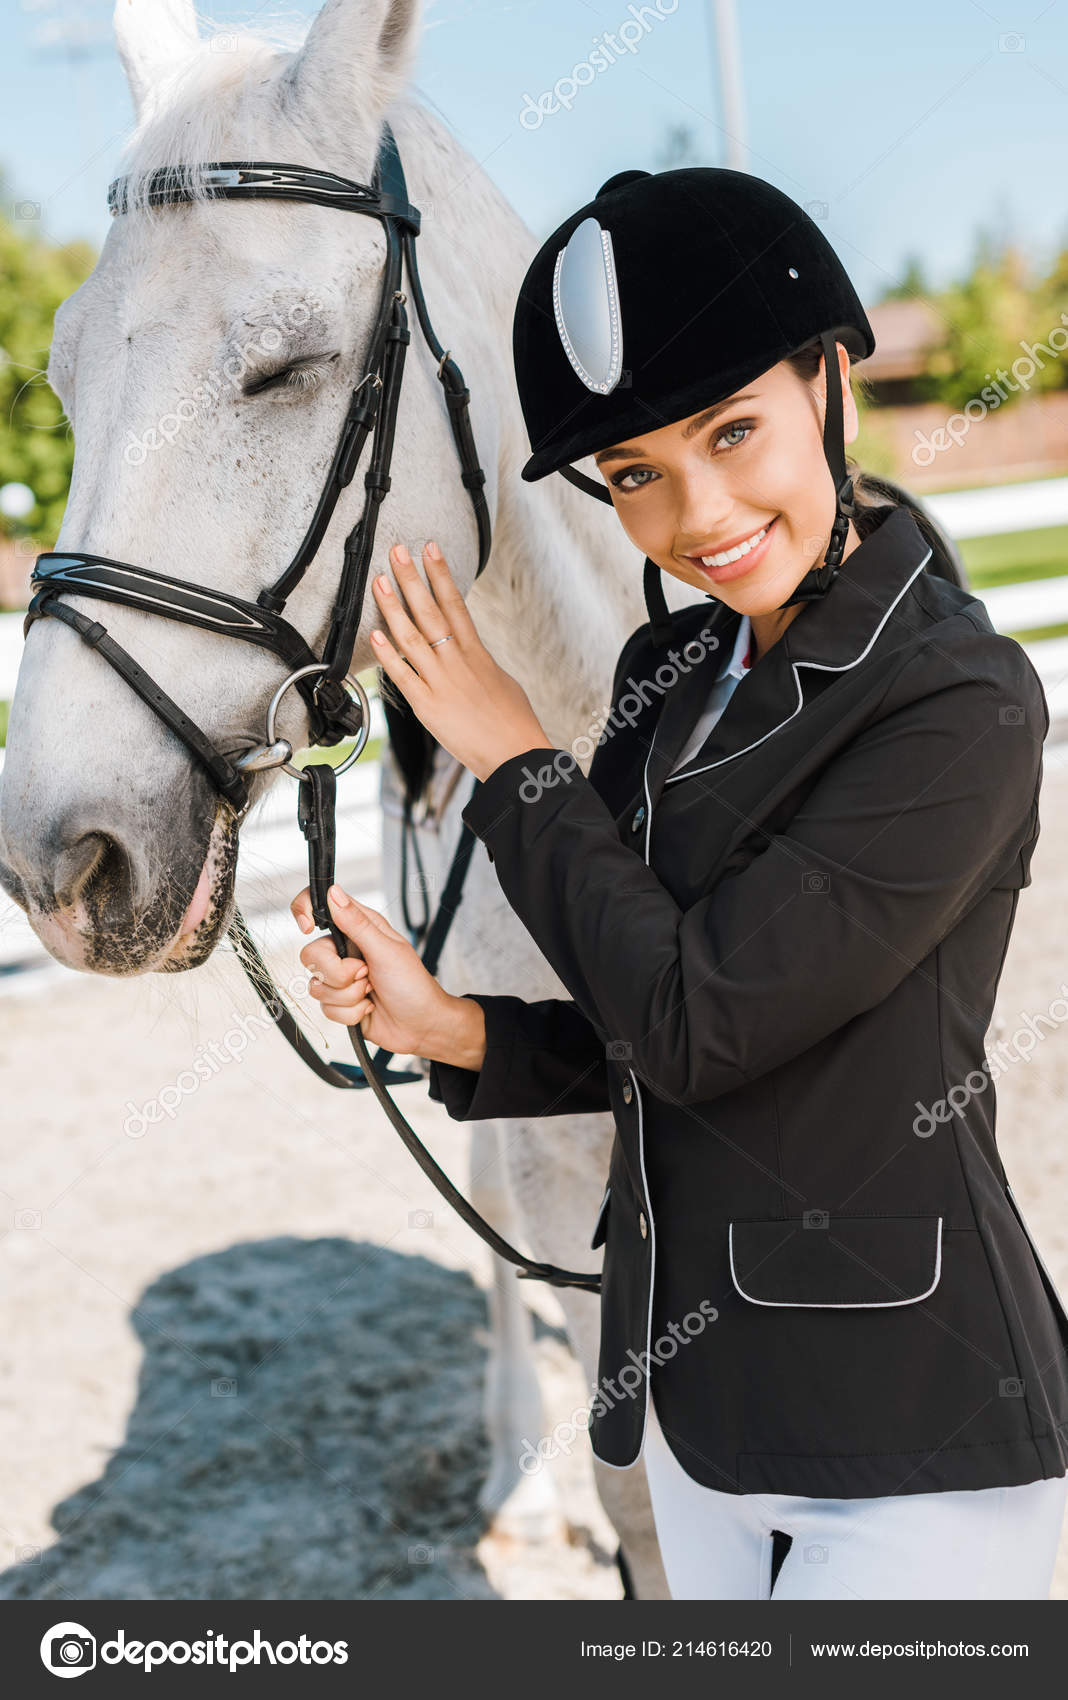 Attractive Female Equestrian Riding Helmet Looking Camera White Horse Horse Stock Photo C Vitalikradko 214616420